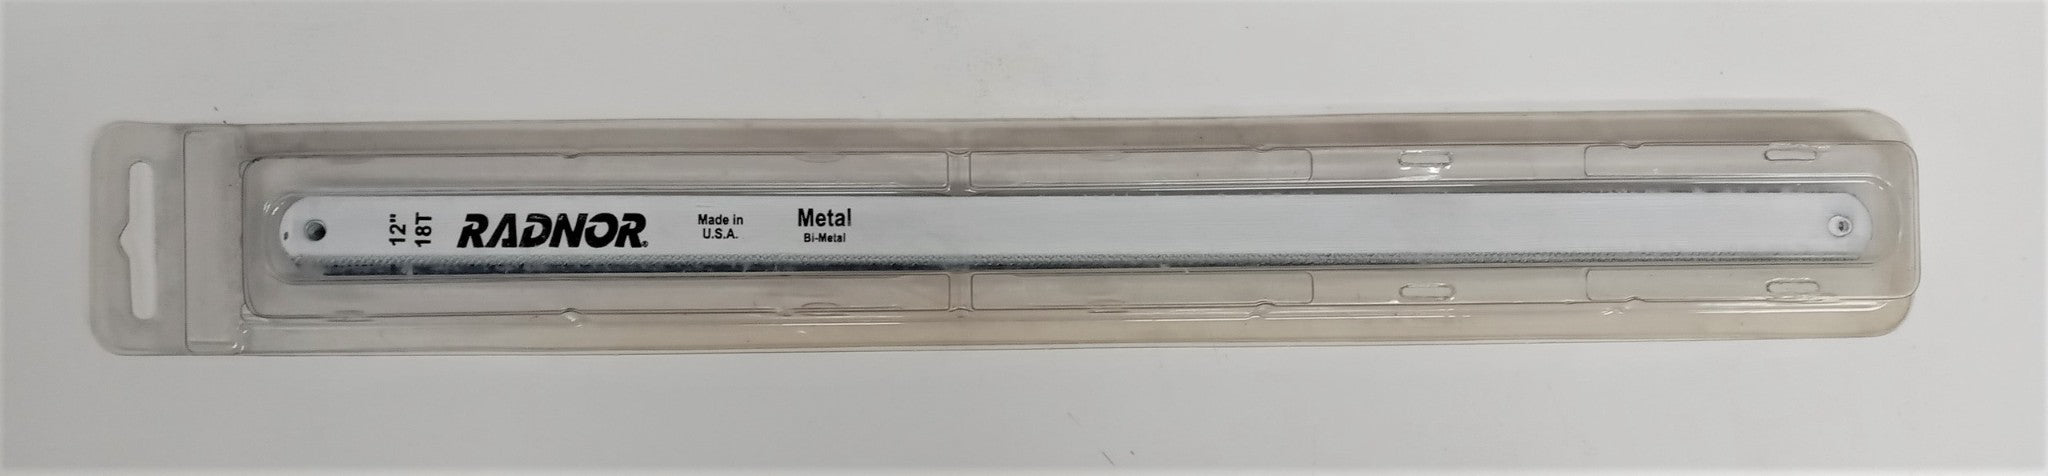 Radnor 64000524 Bi-Metal 12" 18T Hacksaw Blades 10pk USA